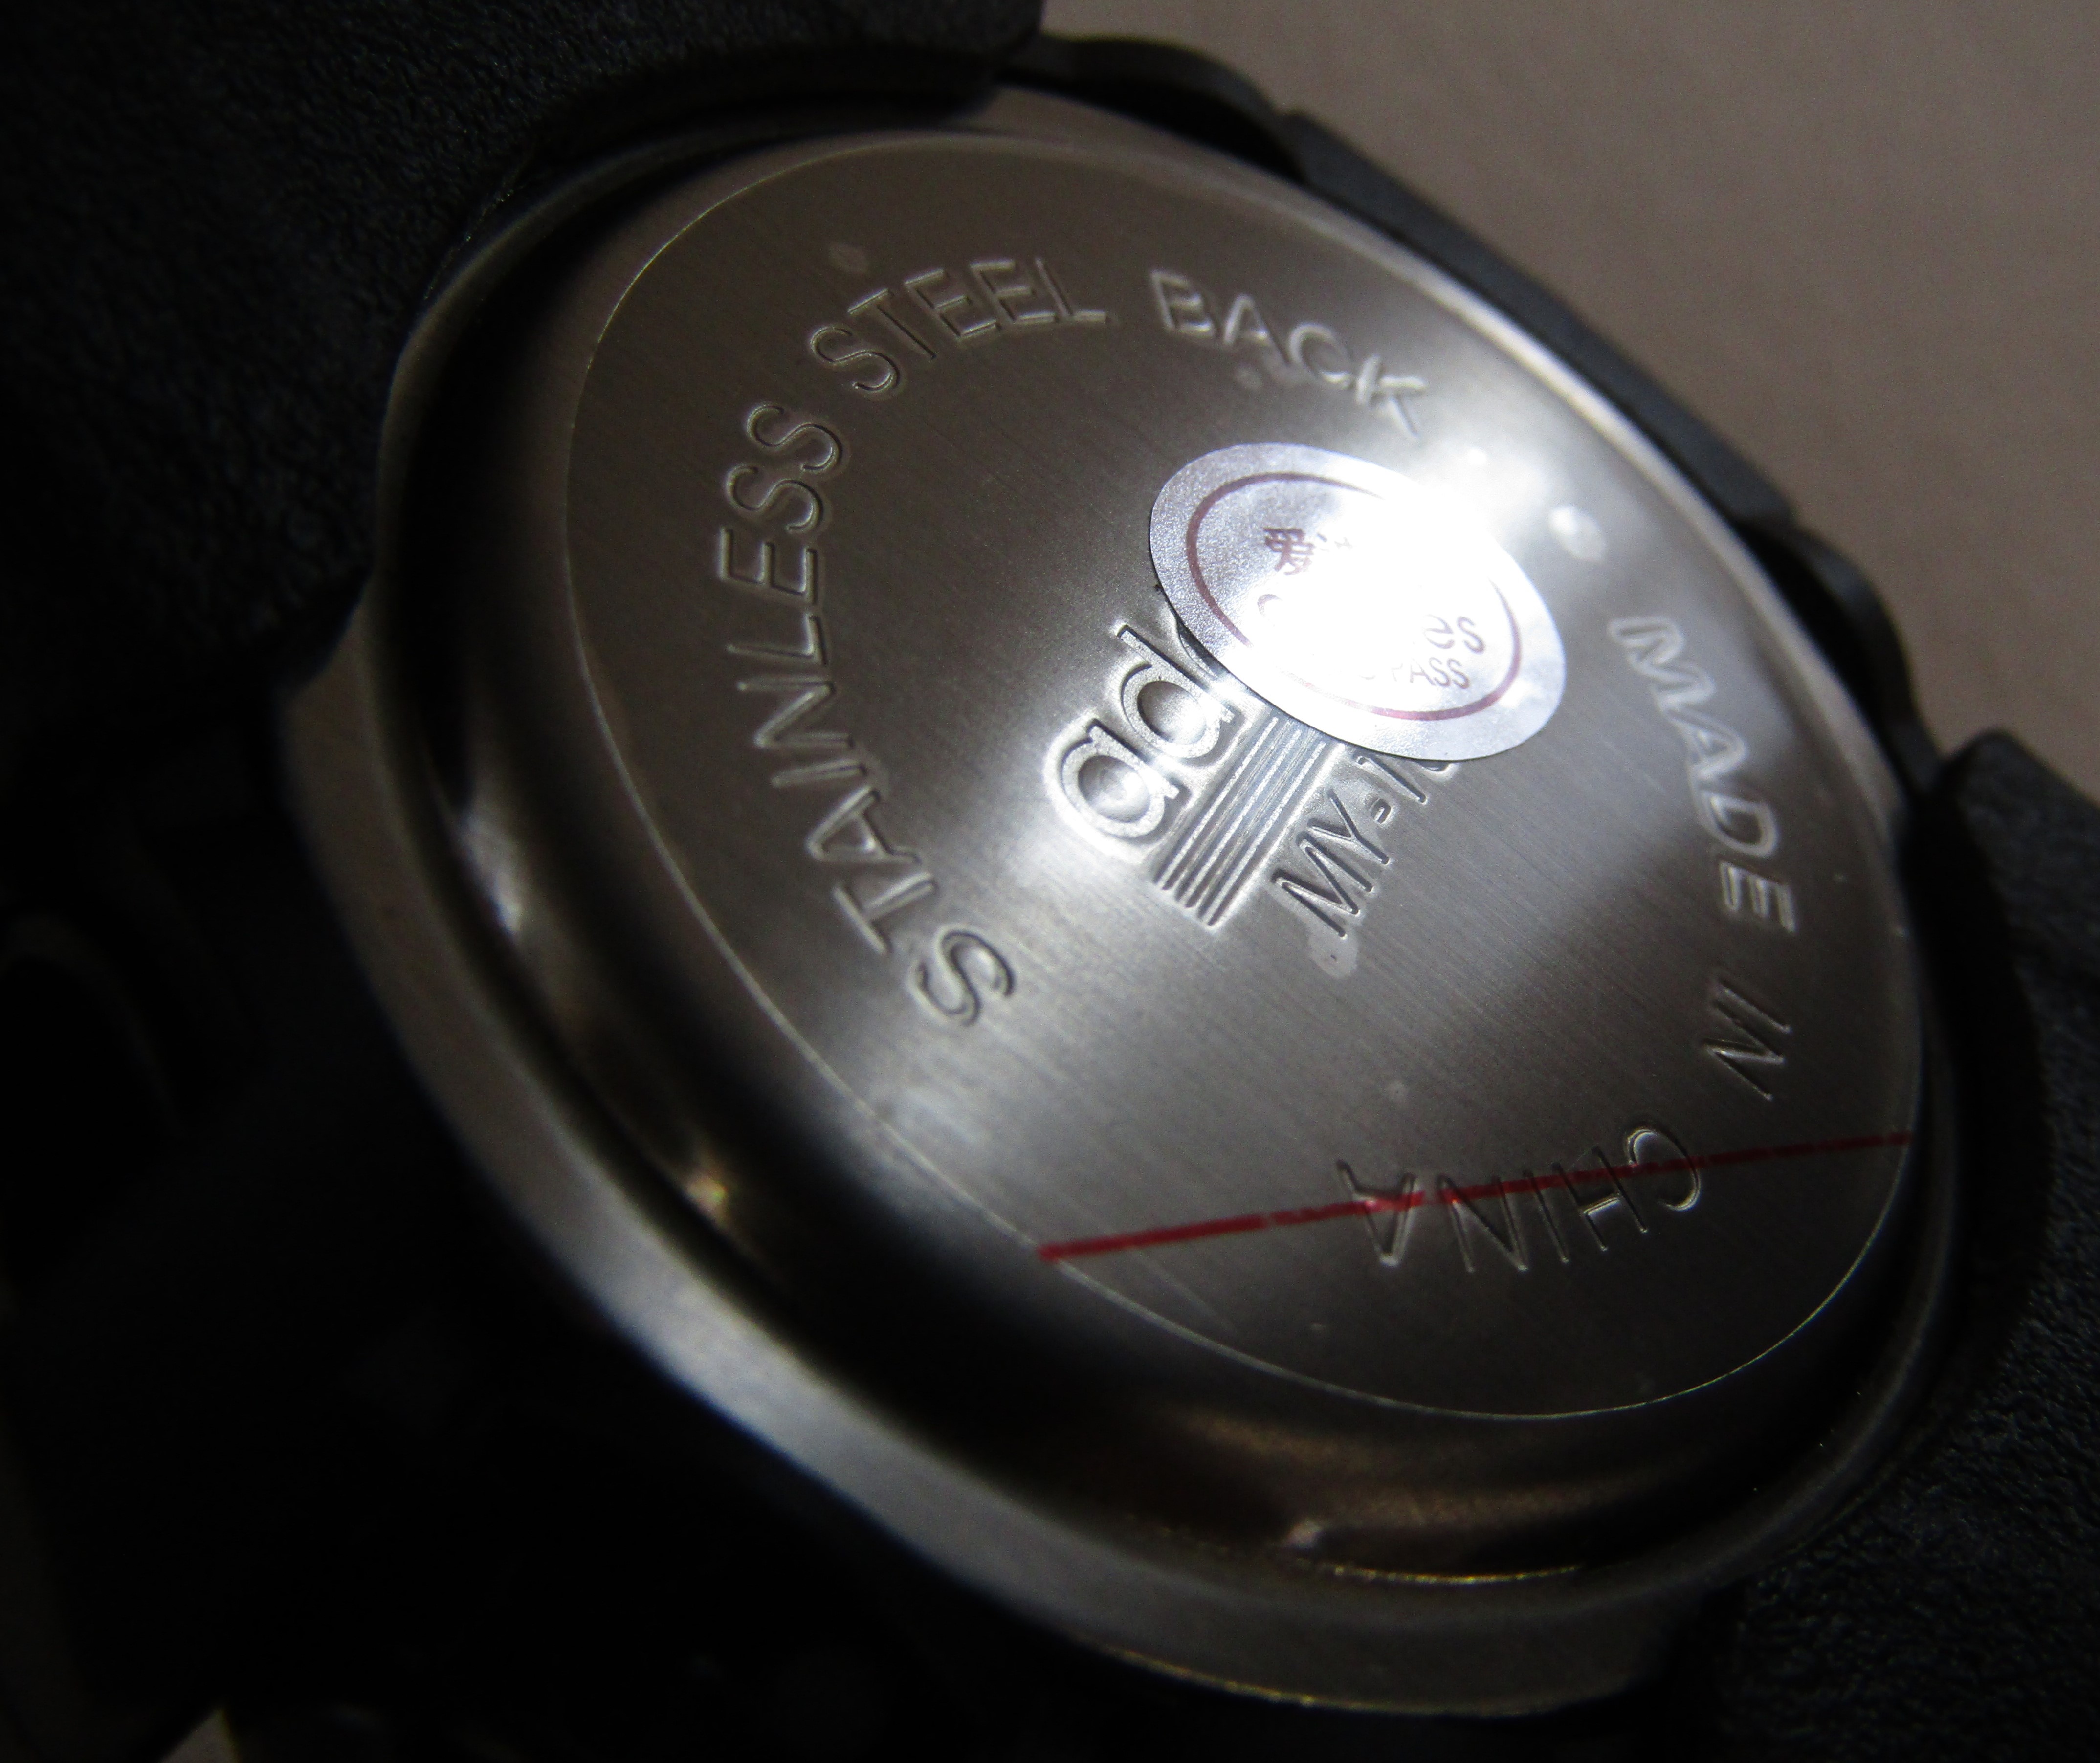 Addies MY-1605 utility sports watch and Inovalley anemomitor windmaster watch - Image 3 of 6